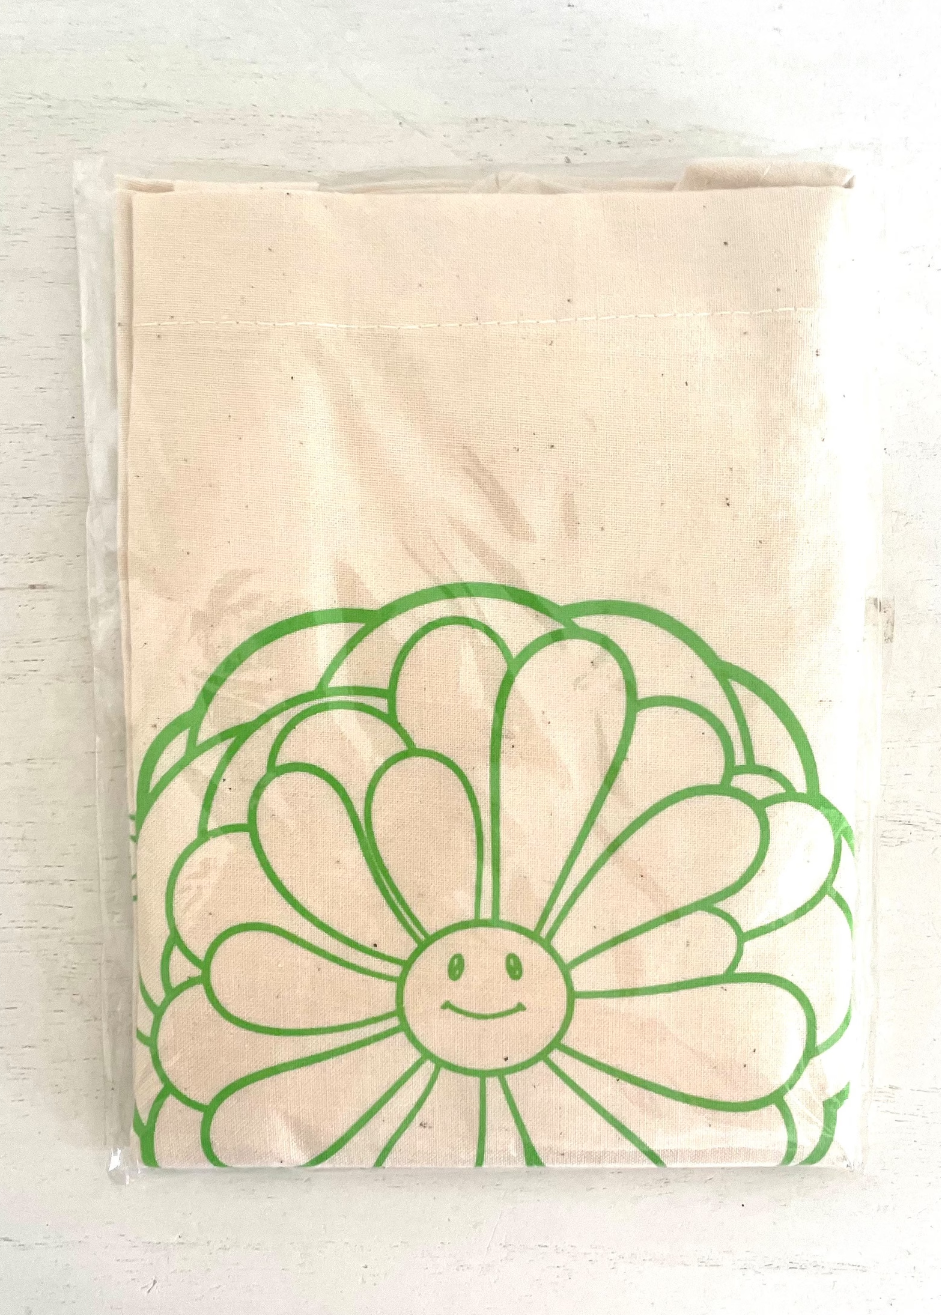 Takashi Murakami Flower Rainbow Weekender Tote Bag by Bakijan